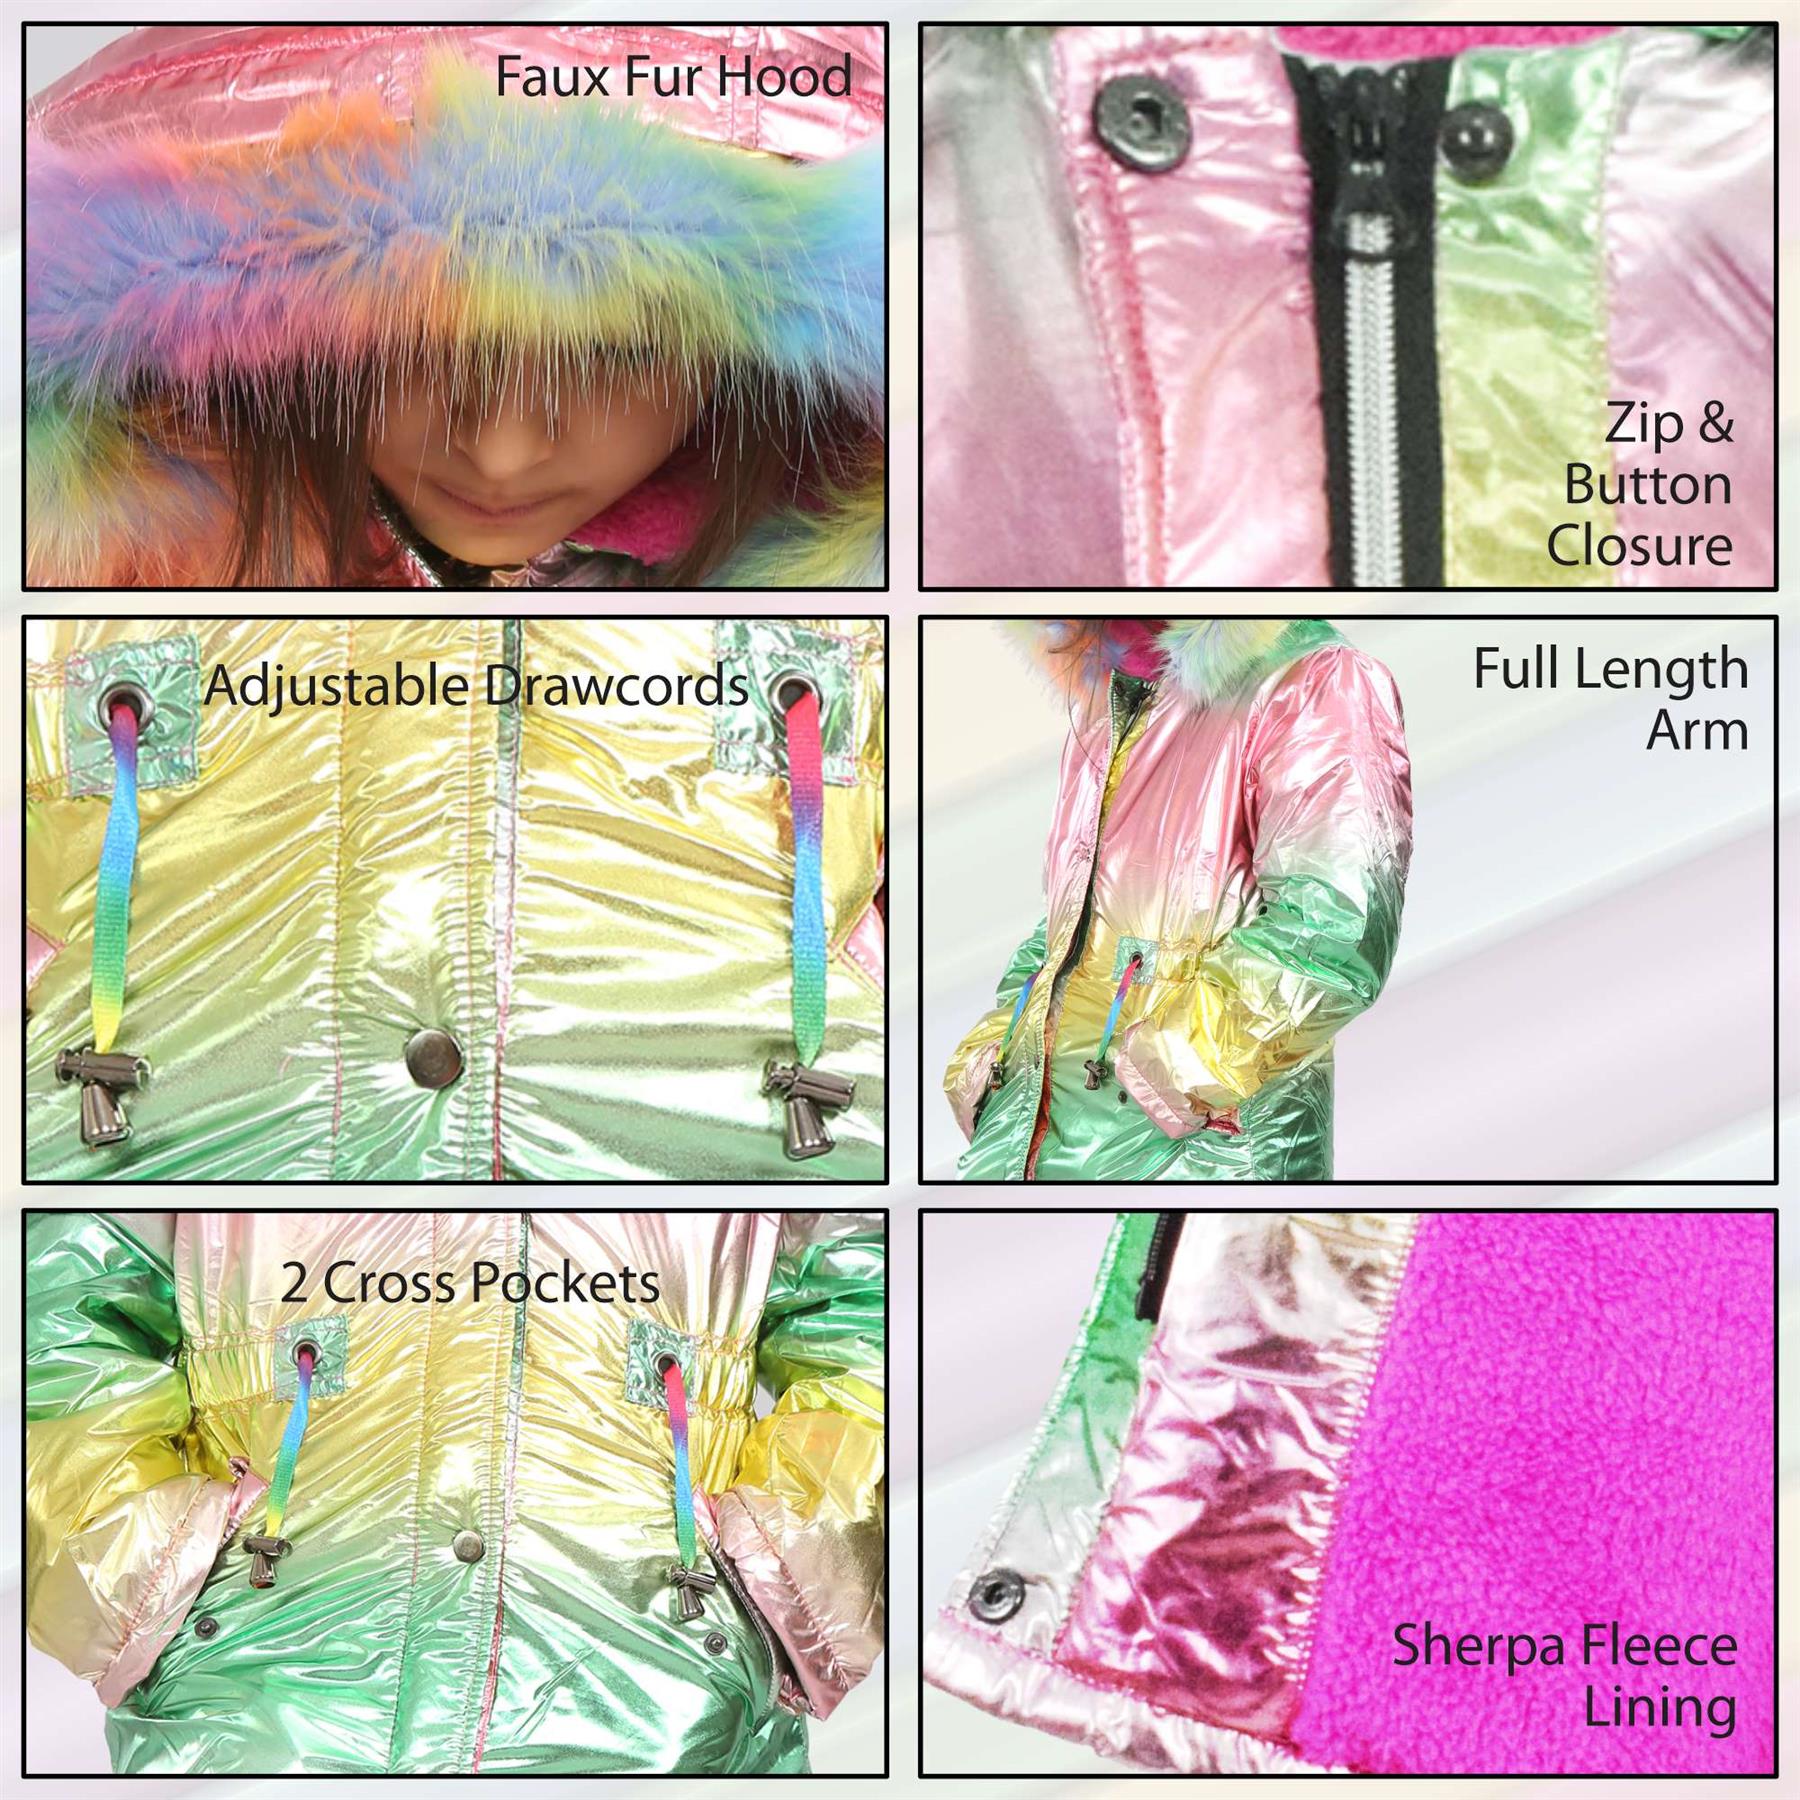 Kids Girls Longline Metallic Coat Foil Rainbow Jacket Fashion